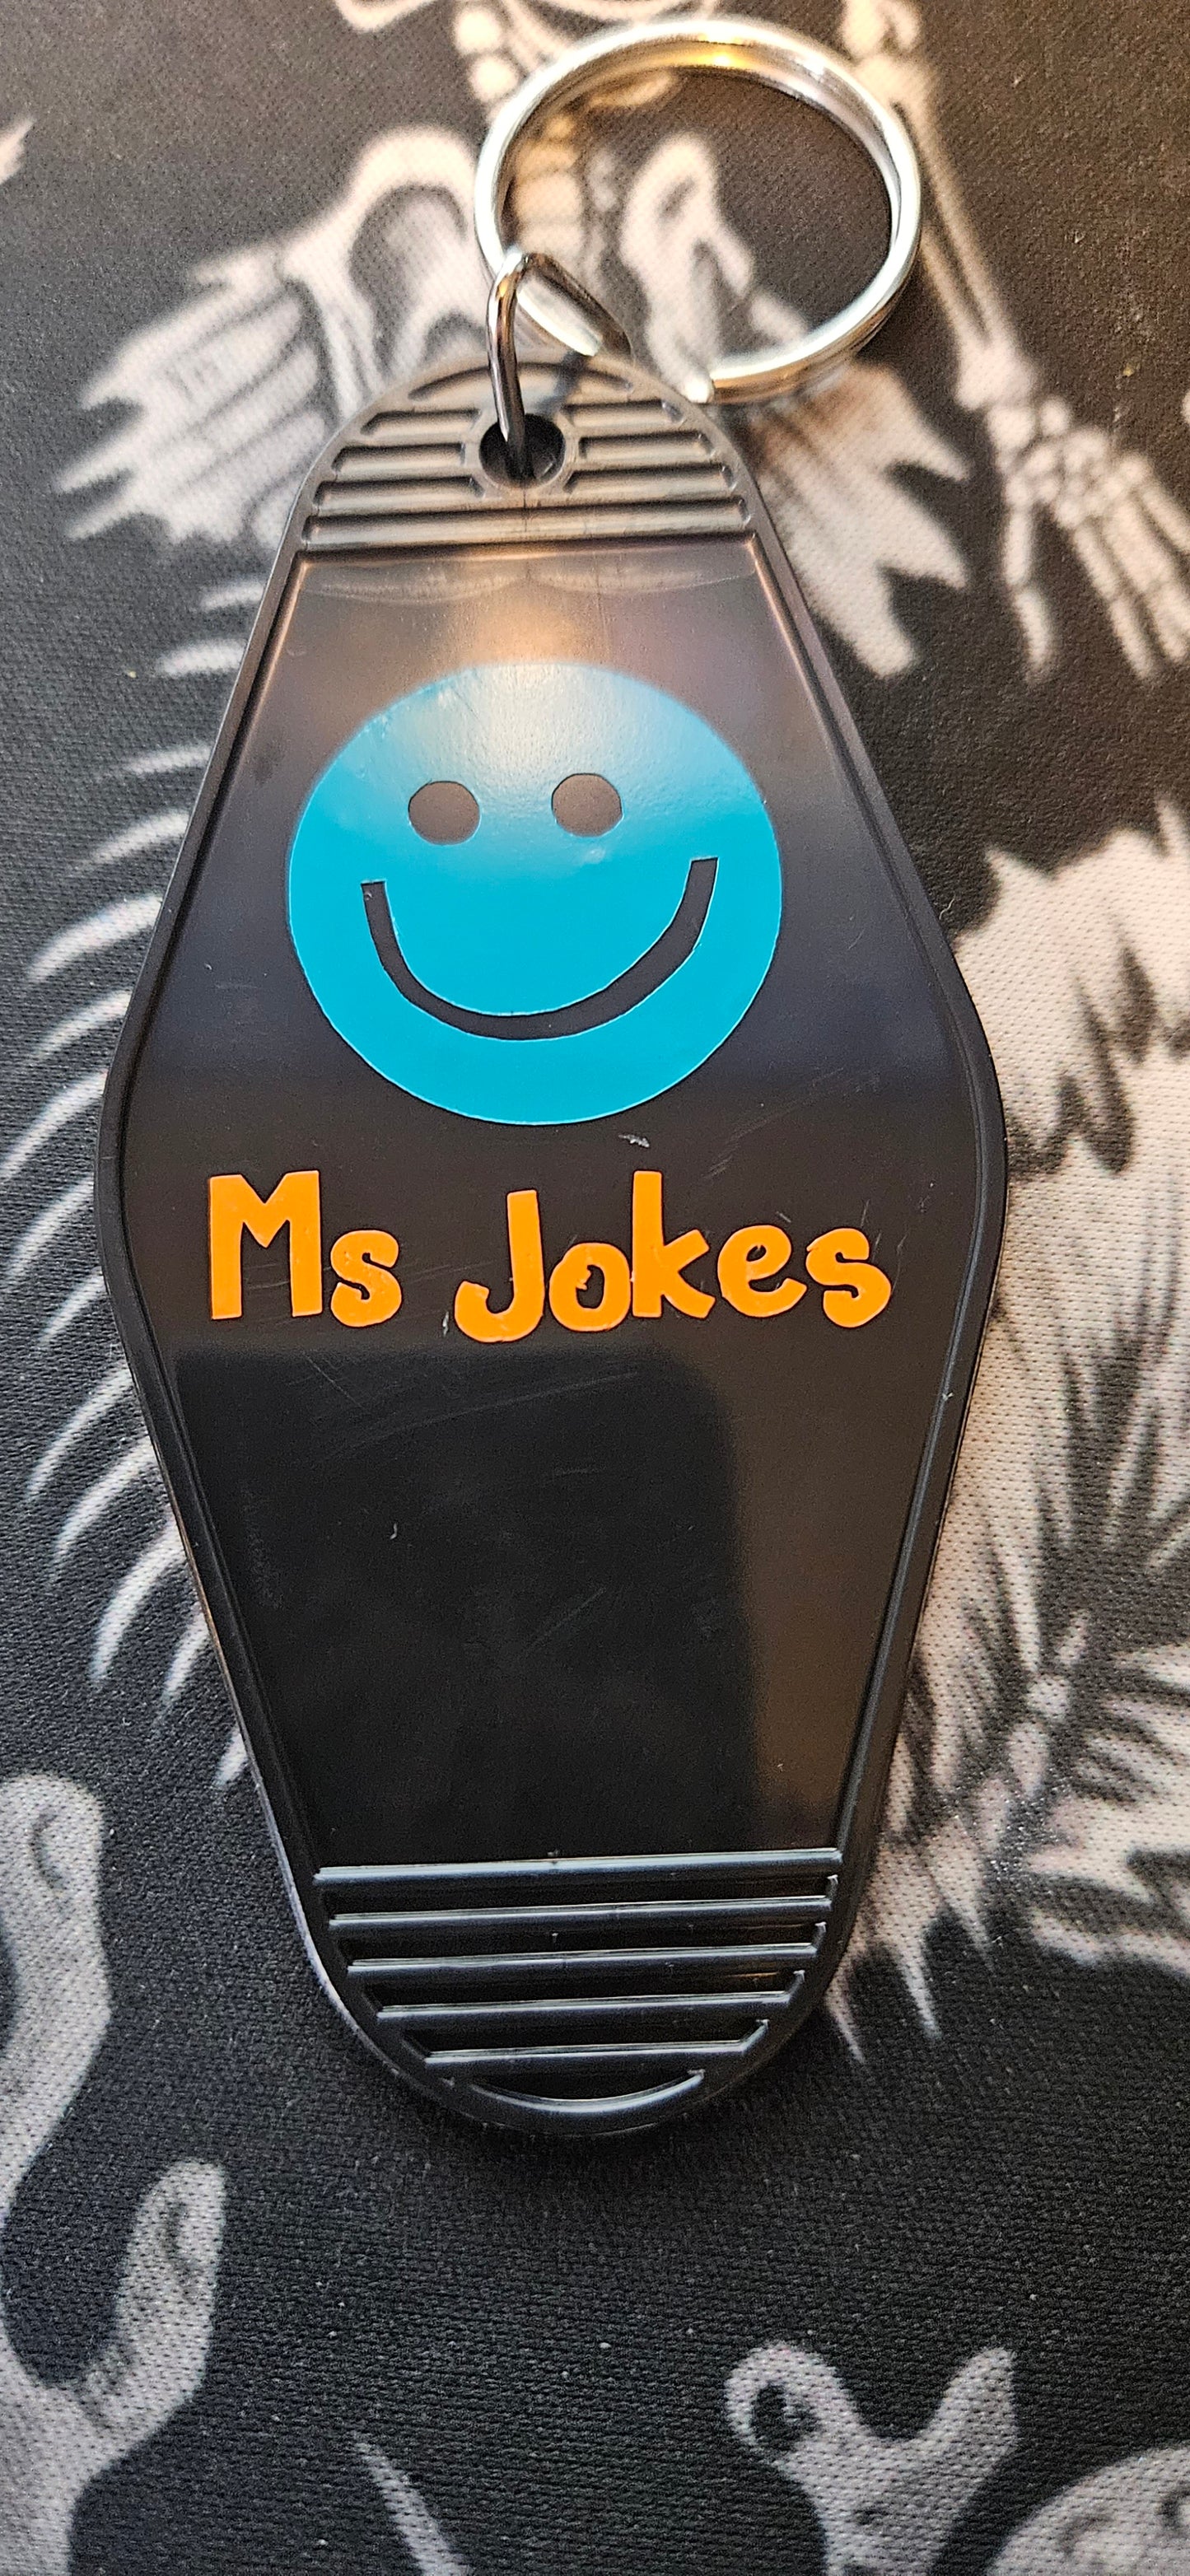 Ms. Jokes Motel Keychain